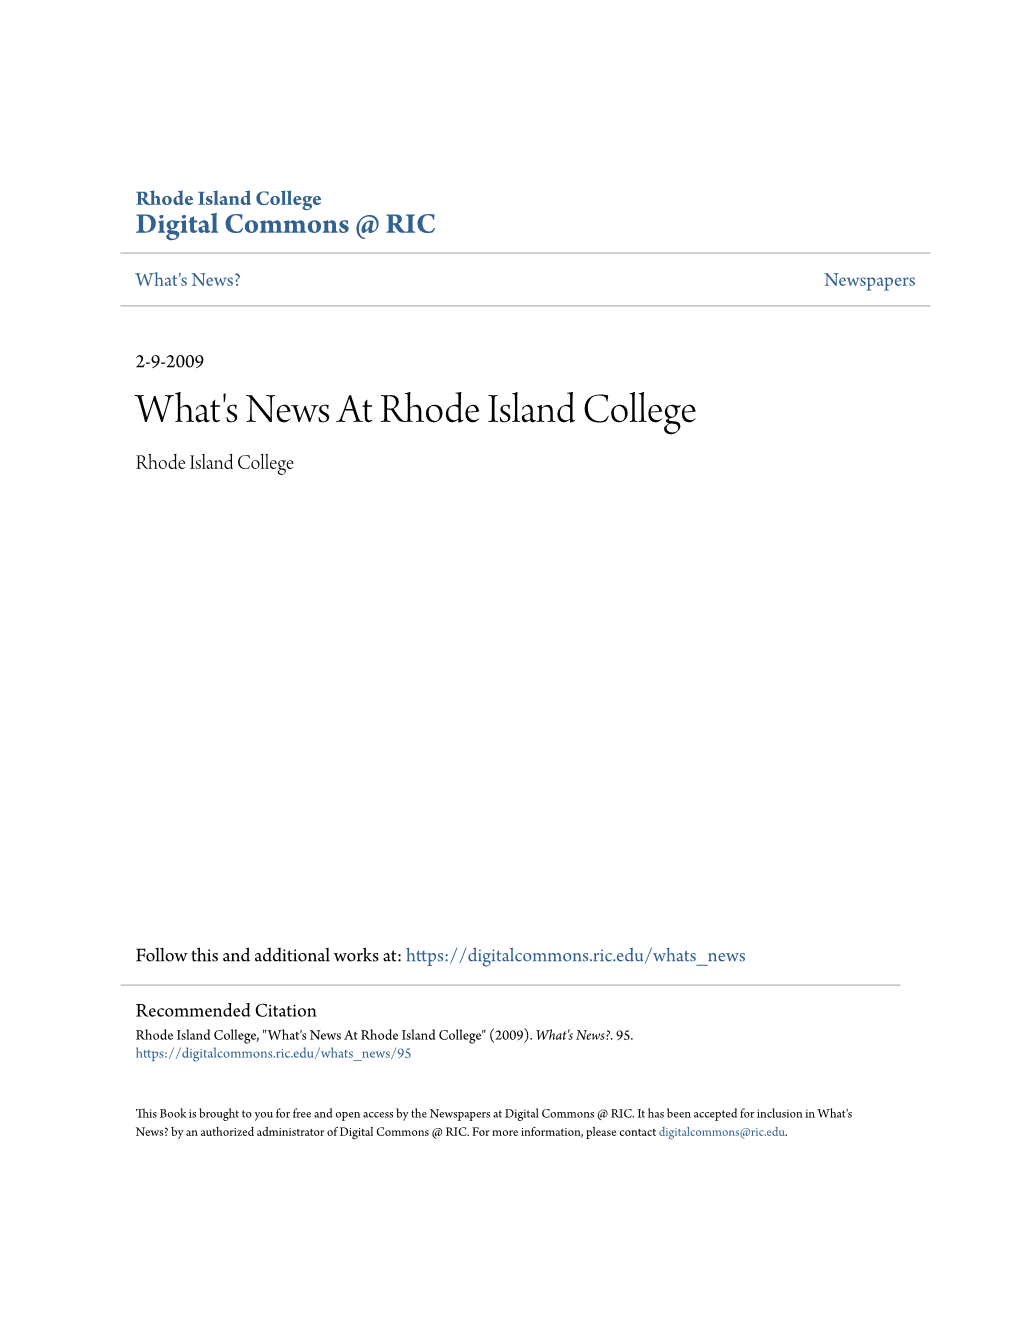 What's News at Rhode Island College Rhode Island College